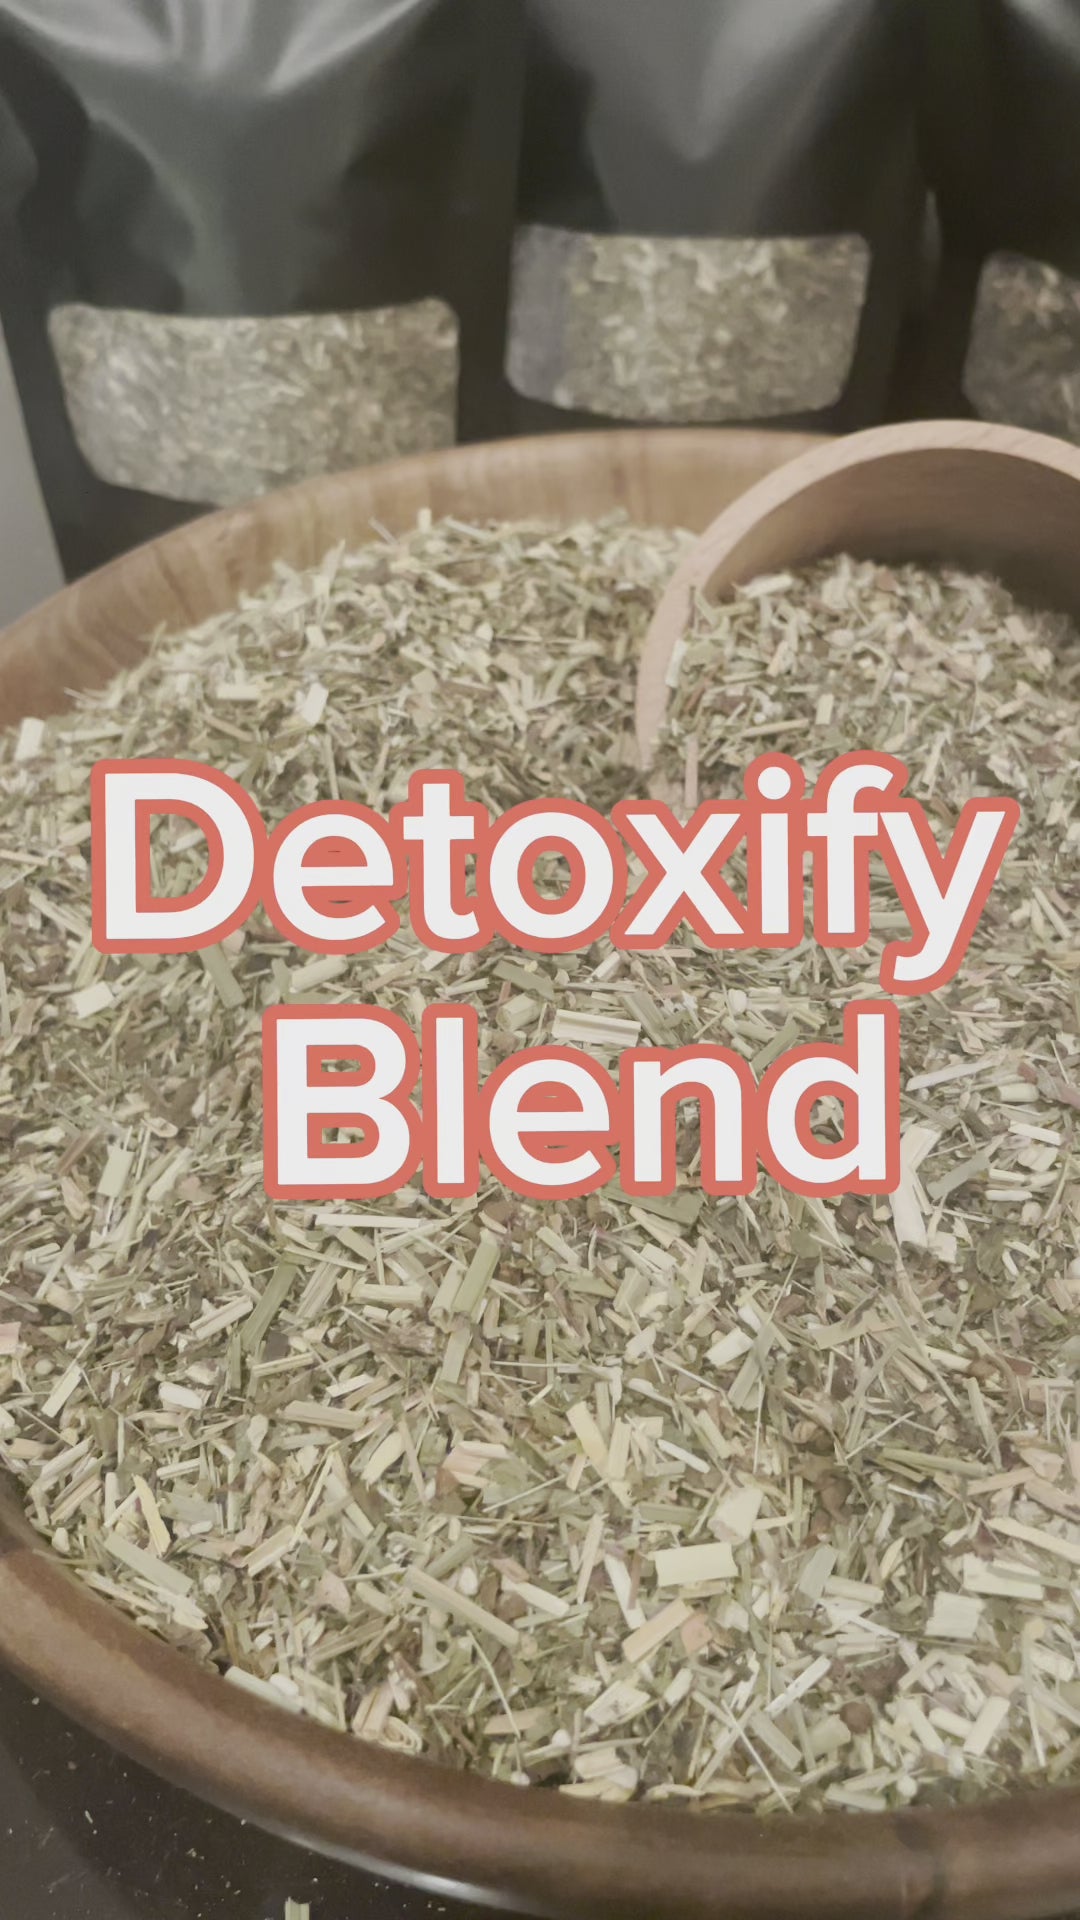 Load video: Organic tea blends